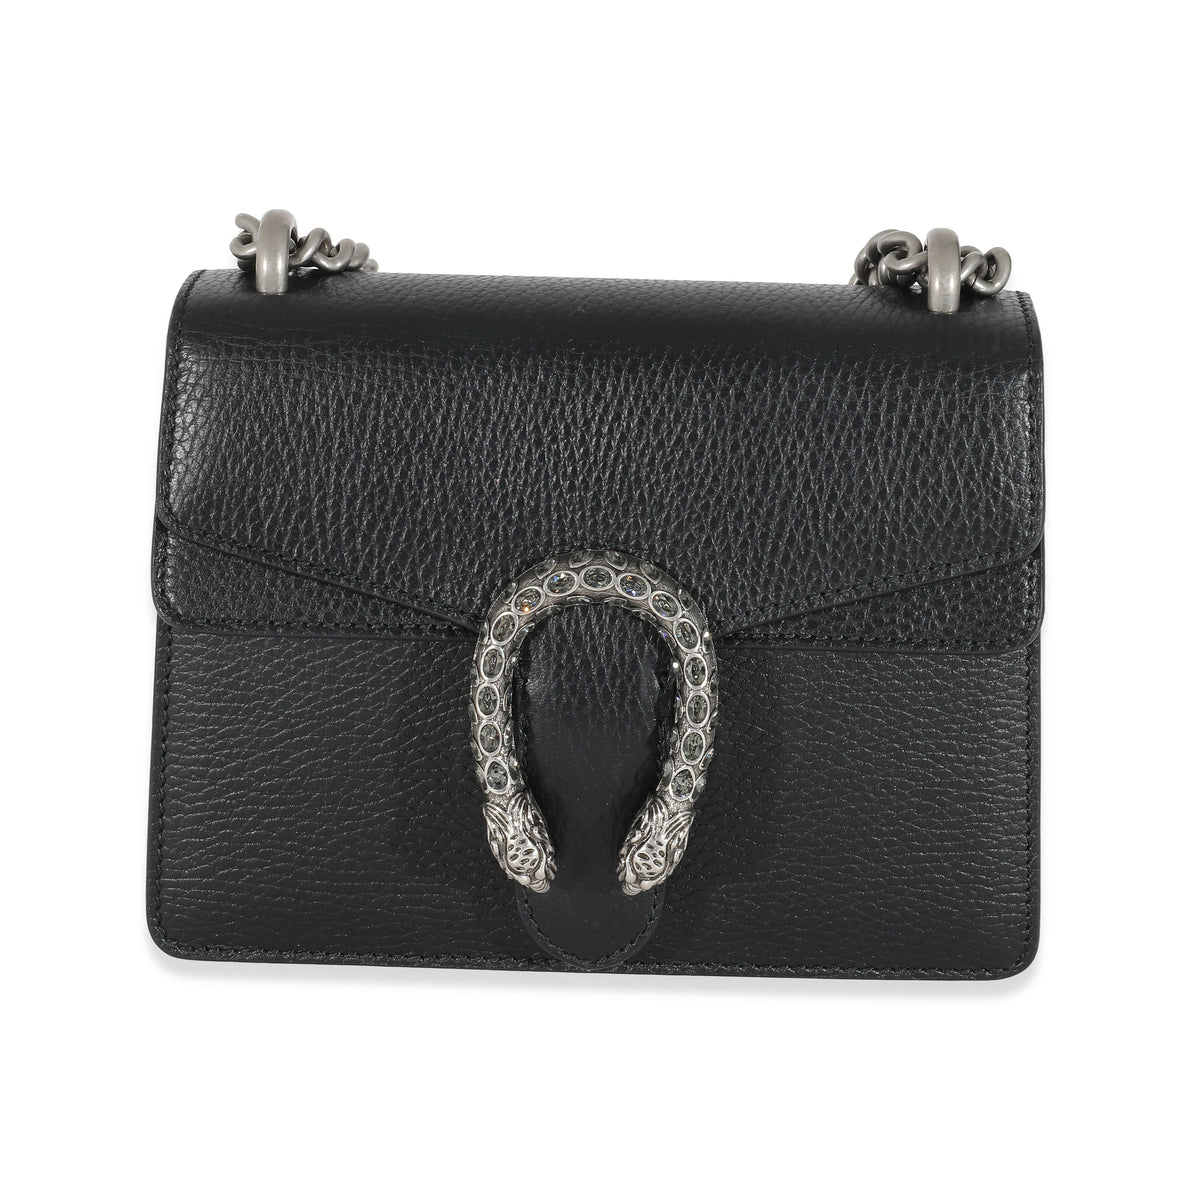 Gucci Rare Authentic Vintage Black Fabric Handbag Purse Satchel With Bow  Logo | eBay